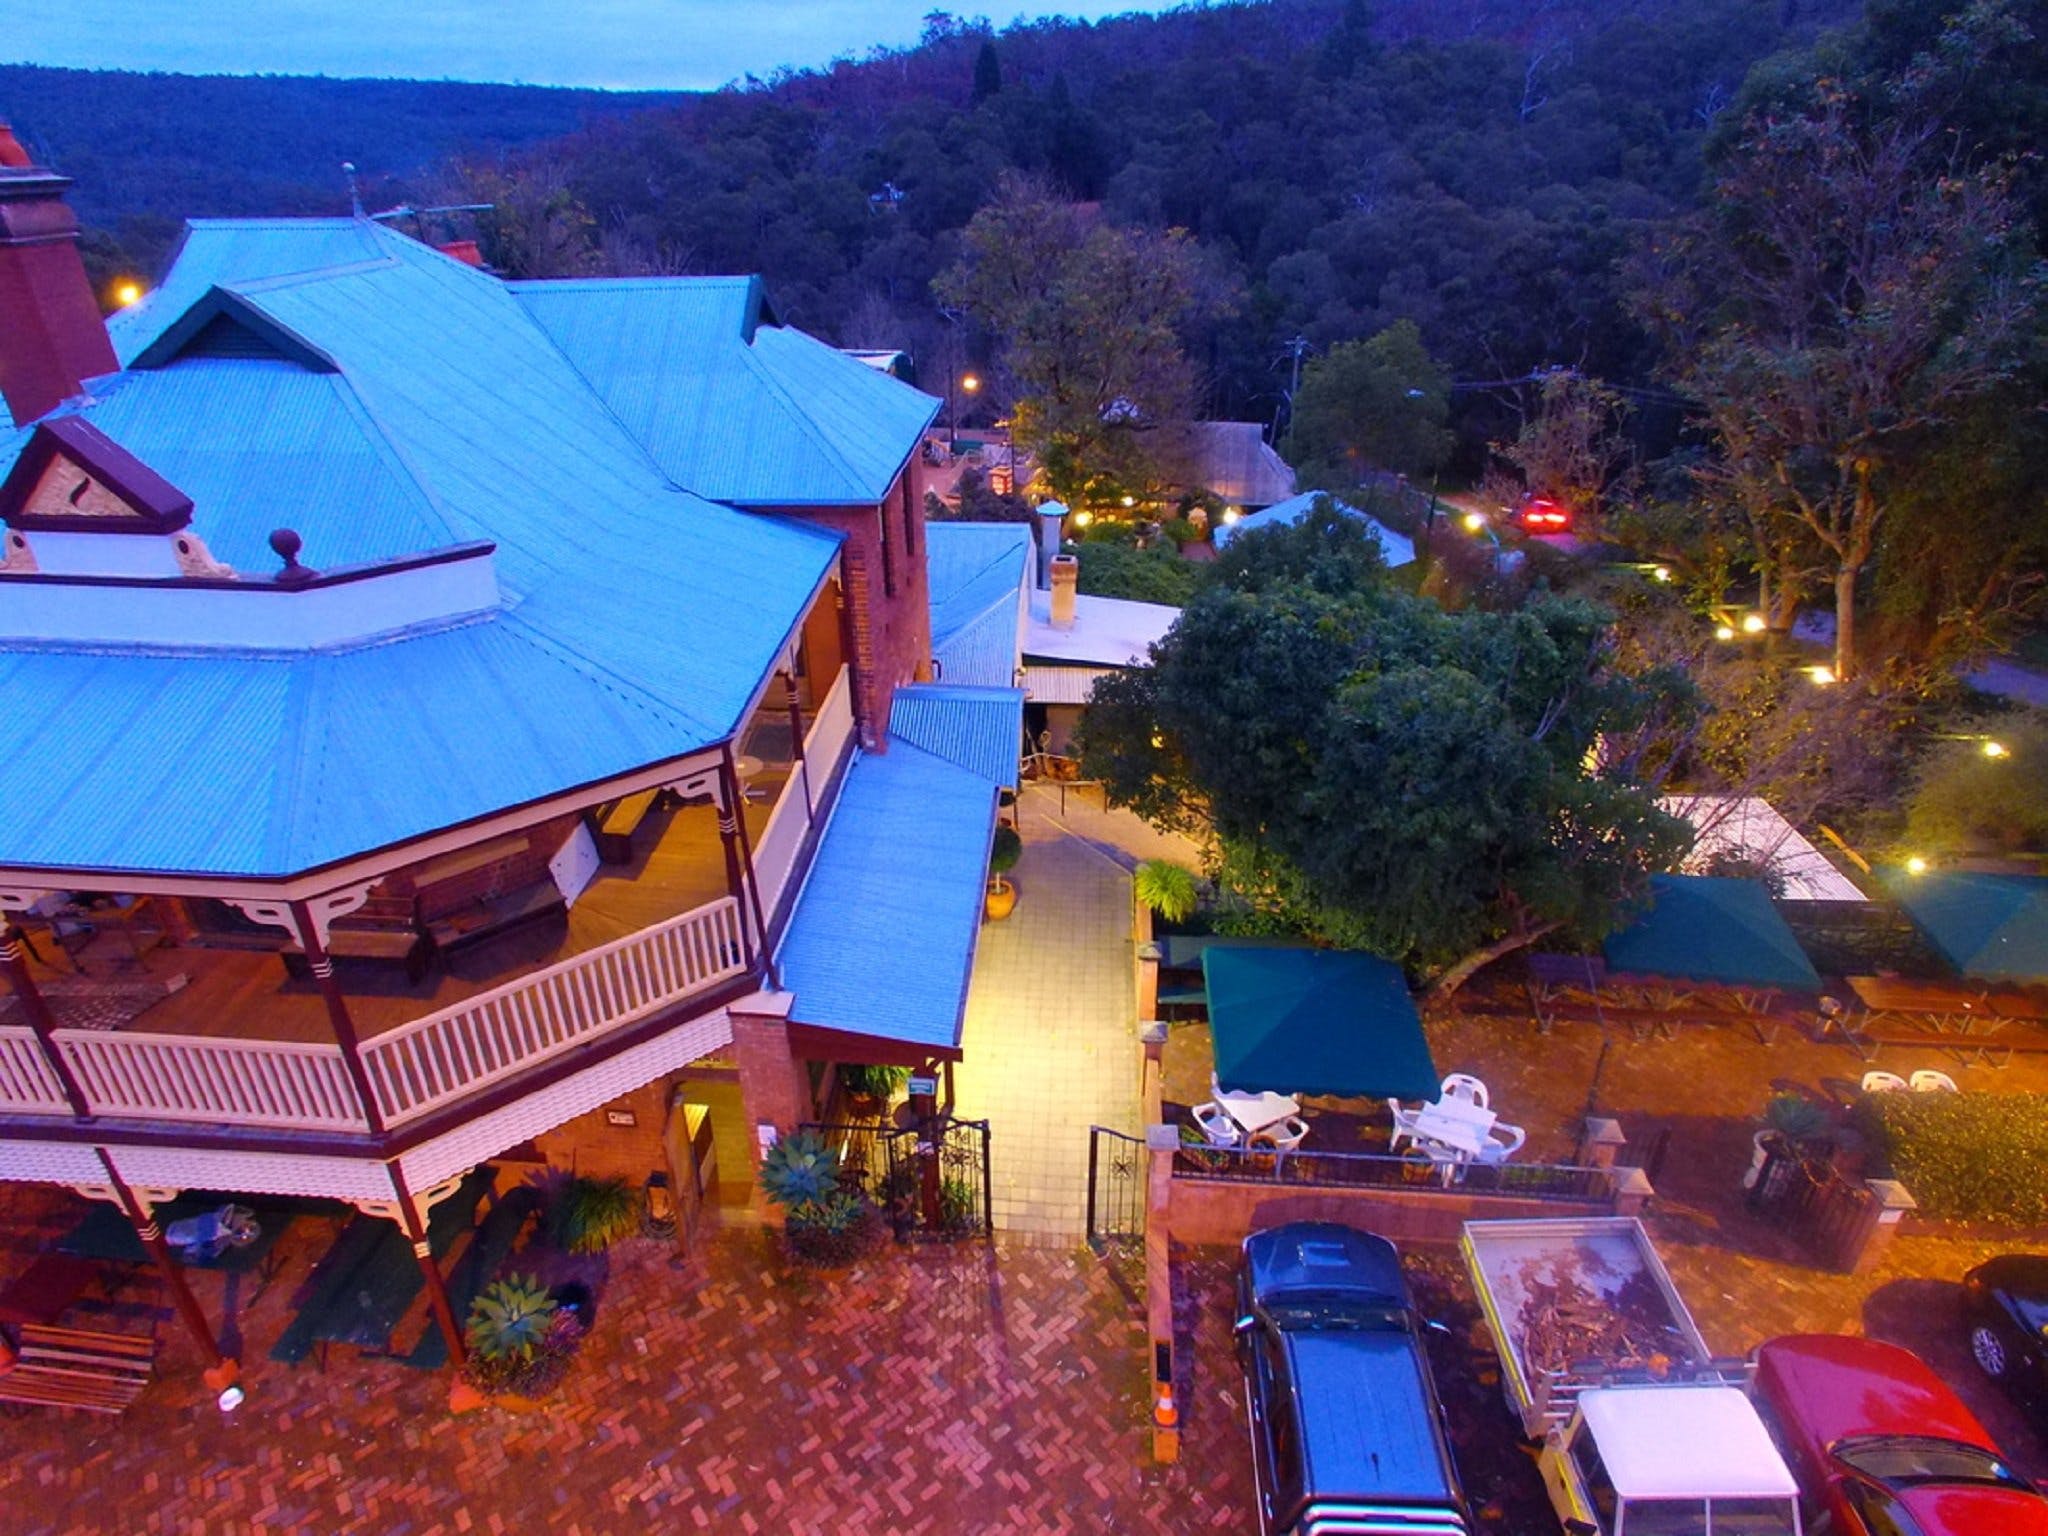 Mundaring Weir Hotel - Accommodation Australia